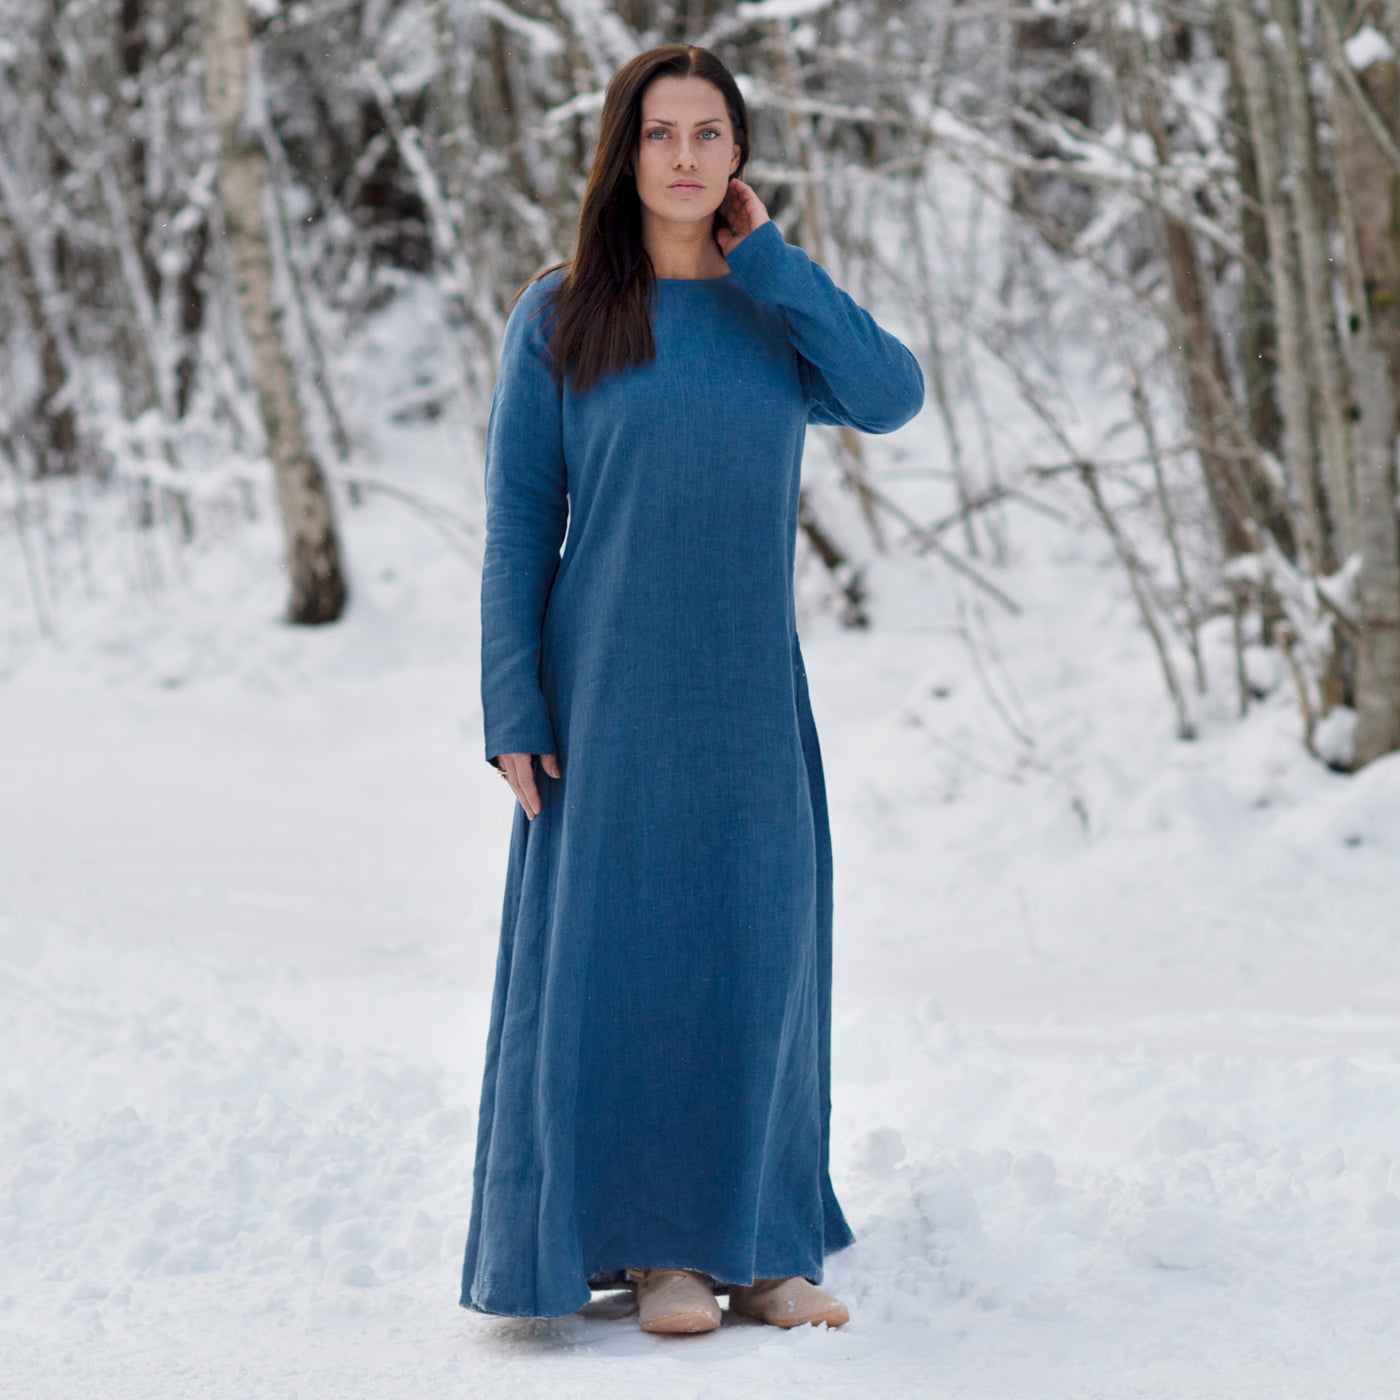 Norse Viking Under Dress in Linen